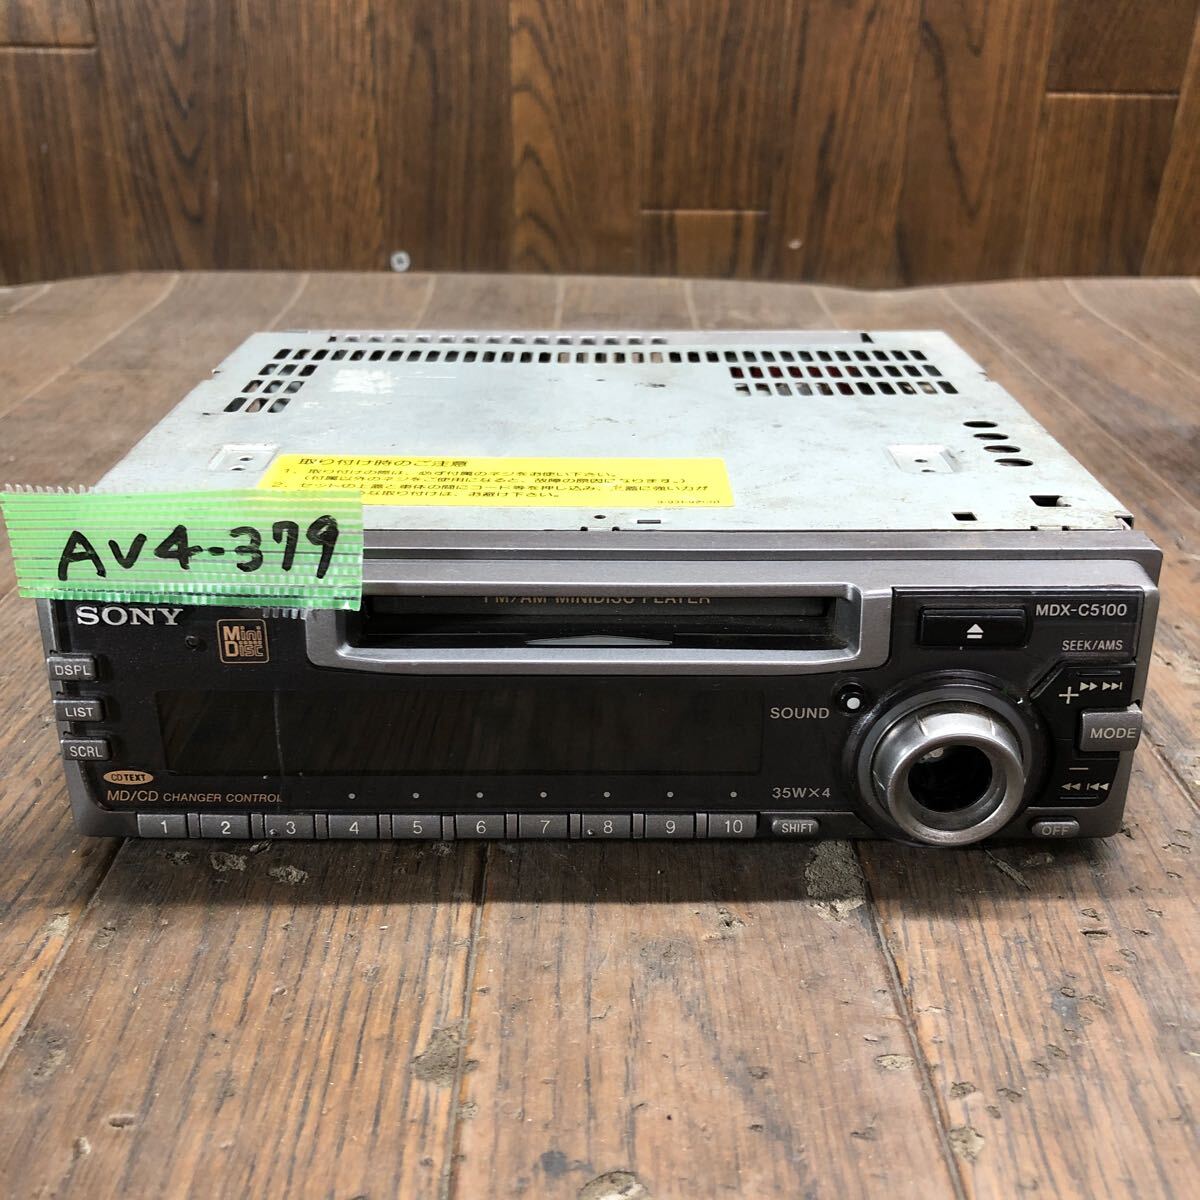 AV4-379 супер-скидка машина стерео MD плеер SONY MDX-C5100 64932 MD FM/AM электризация не проверка Junk 